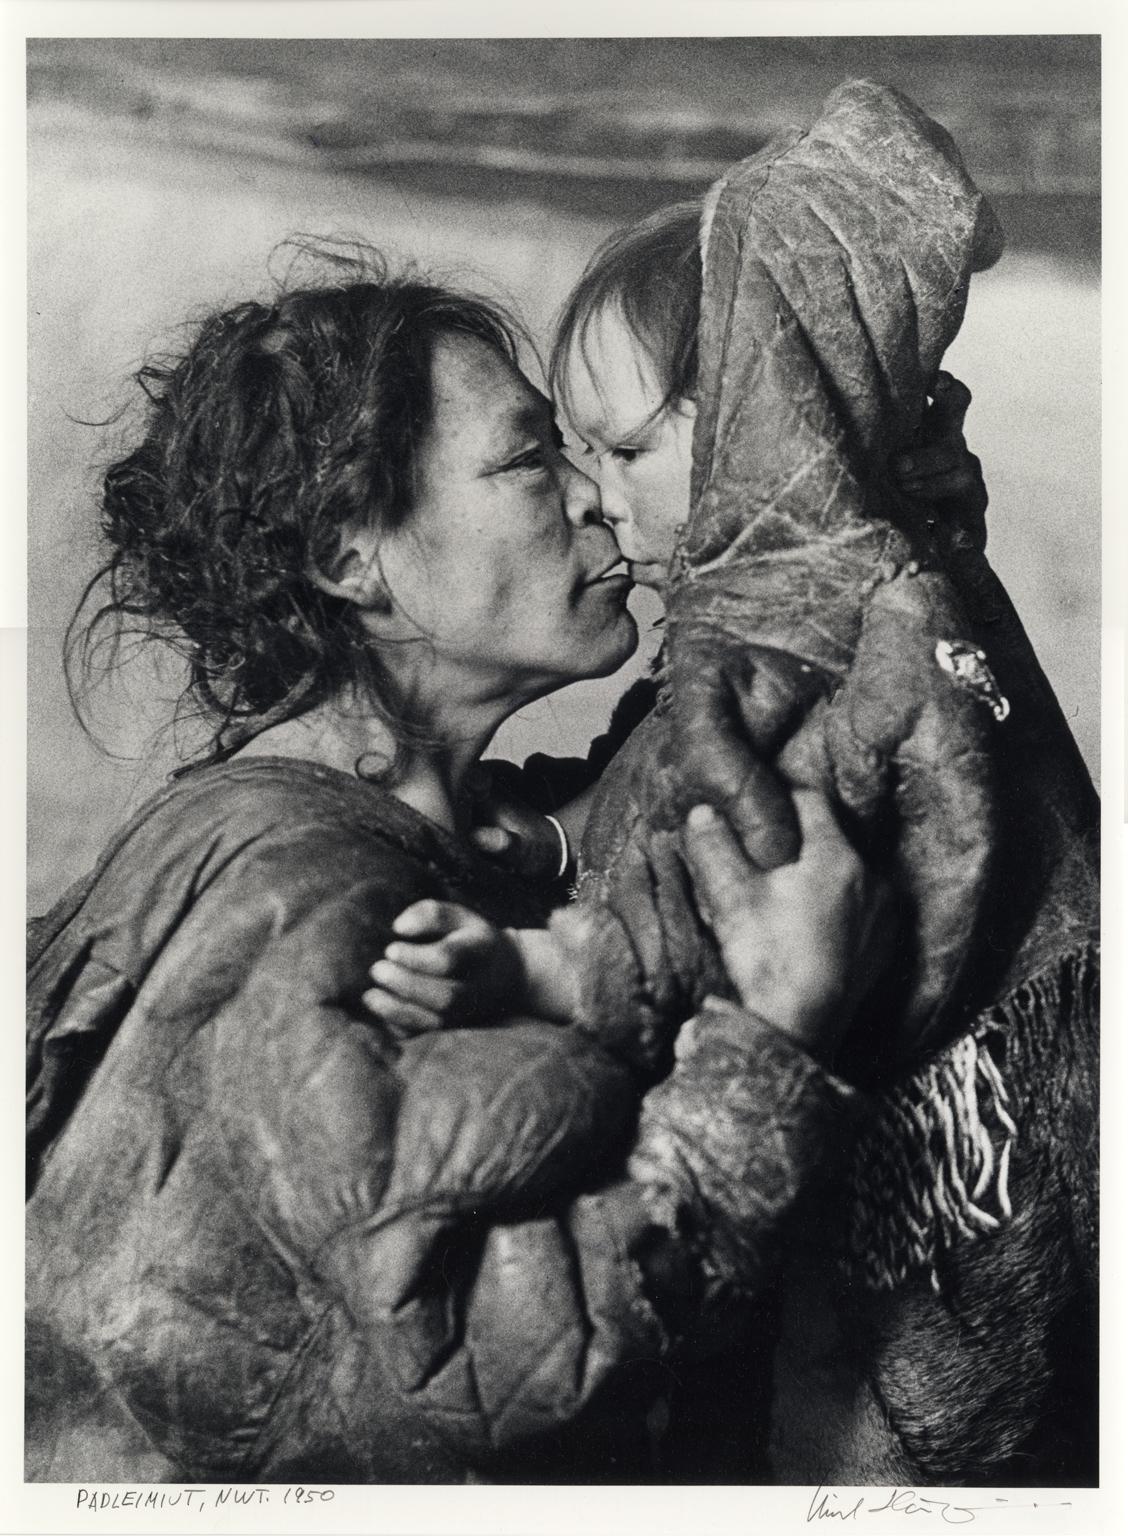 Richard Harrington Black and White Photograph - Padleimuit, NWT, 1950